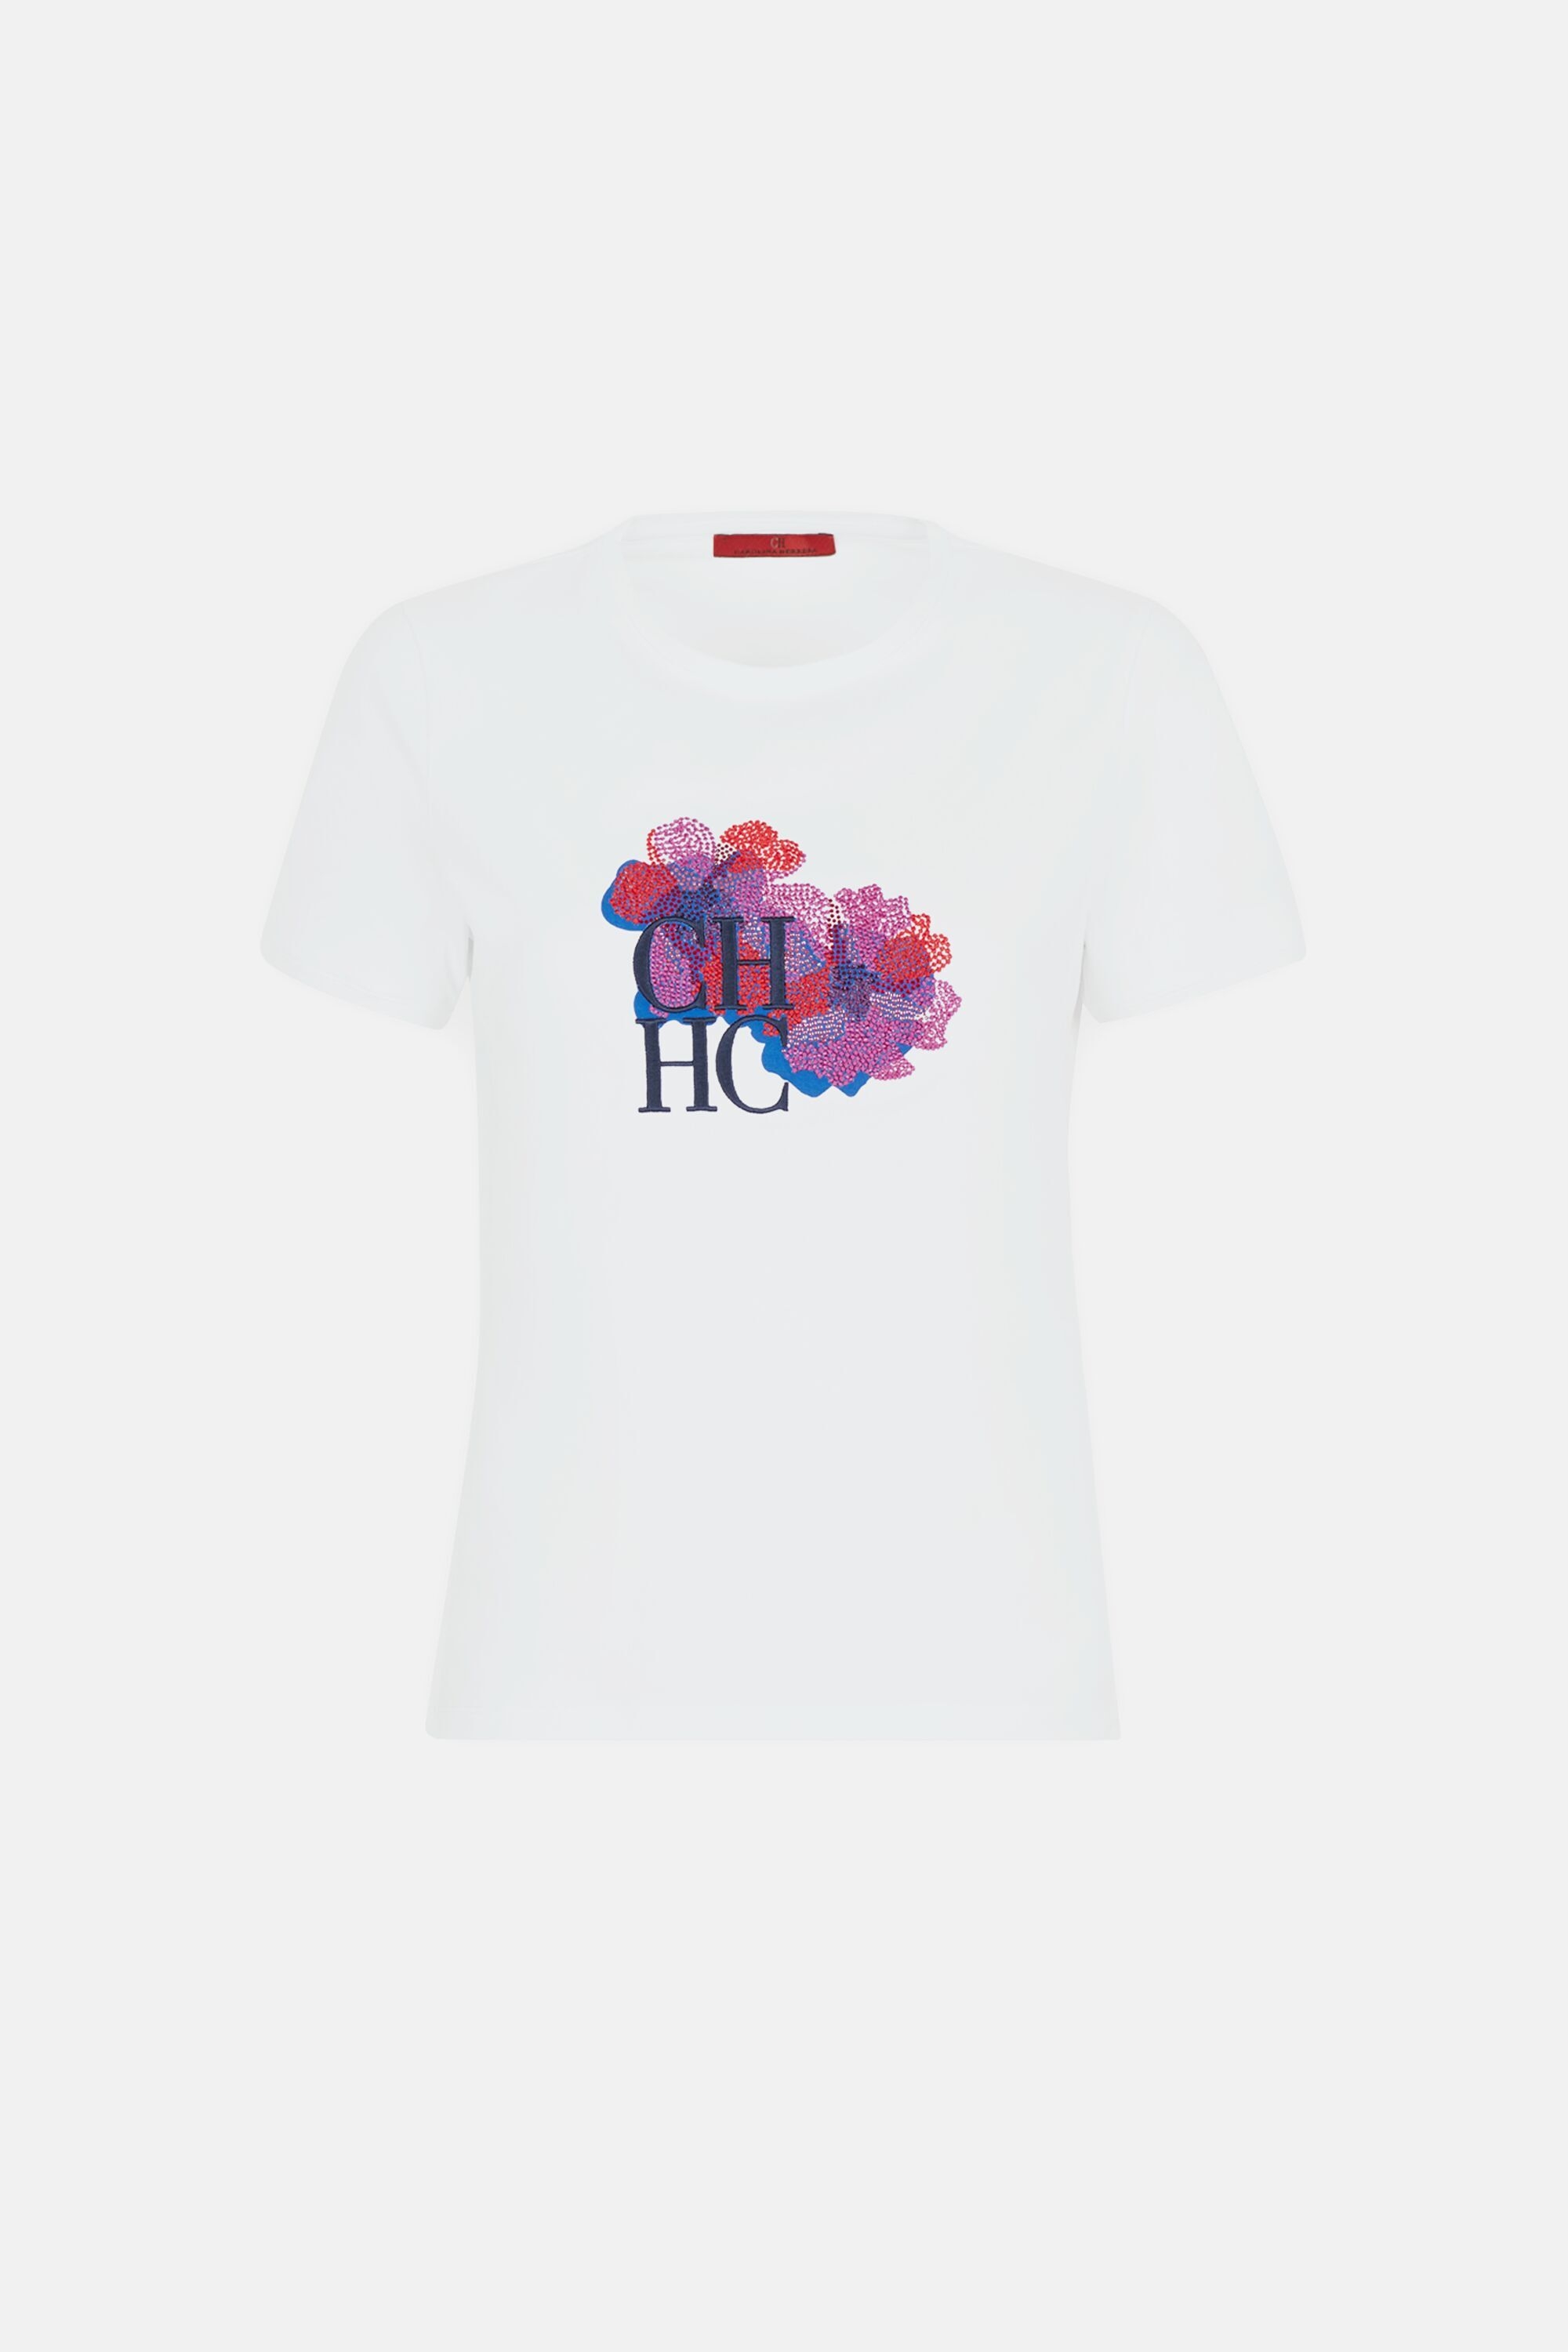 Camiseta CH con flores